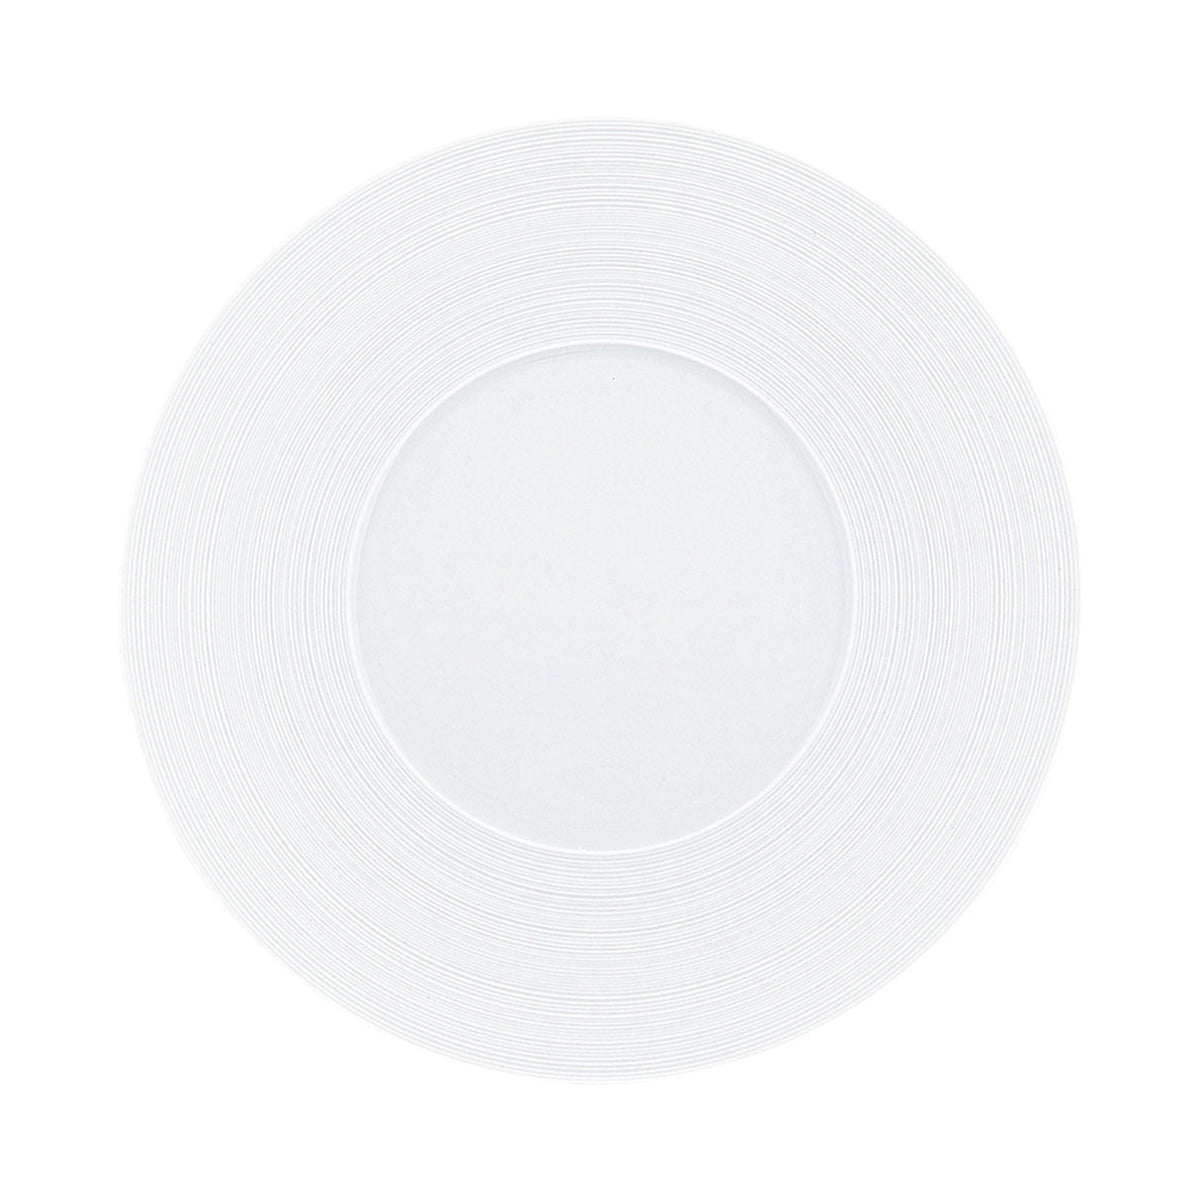 HEMISPHERE White Satin - 29 cm plate